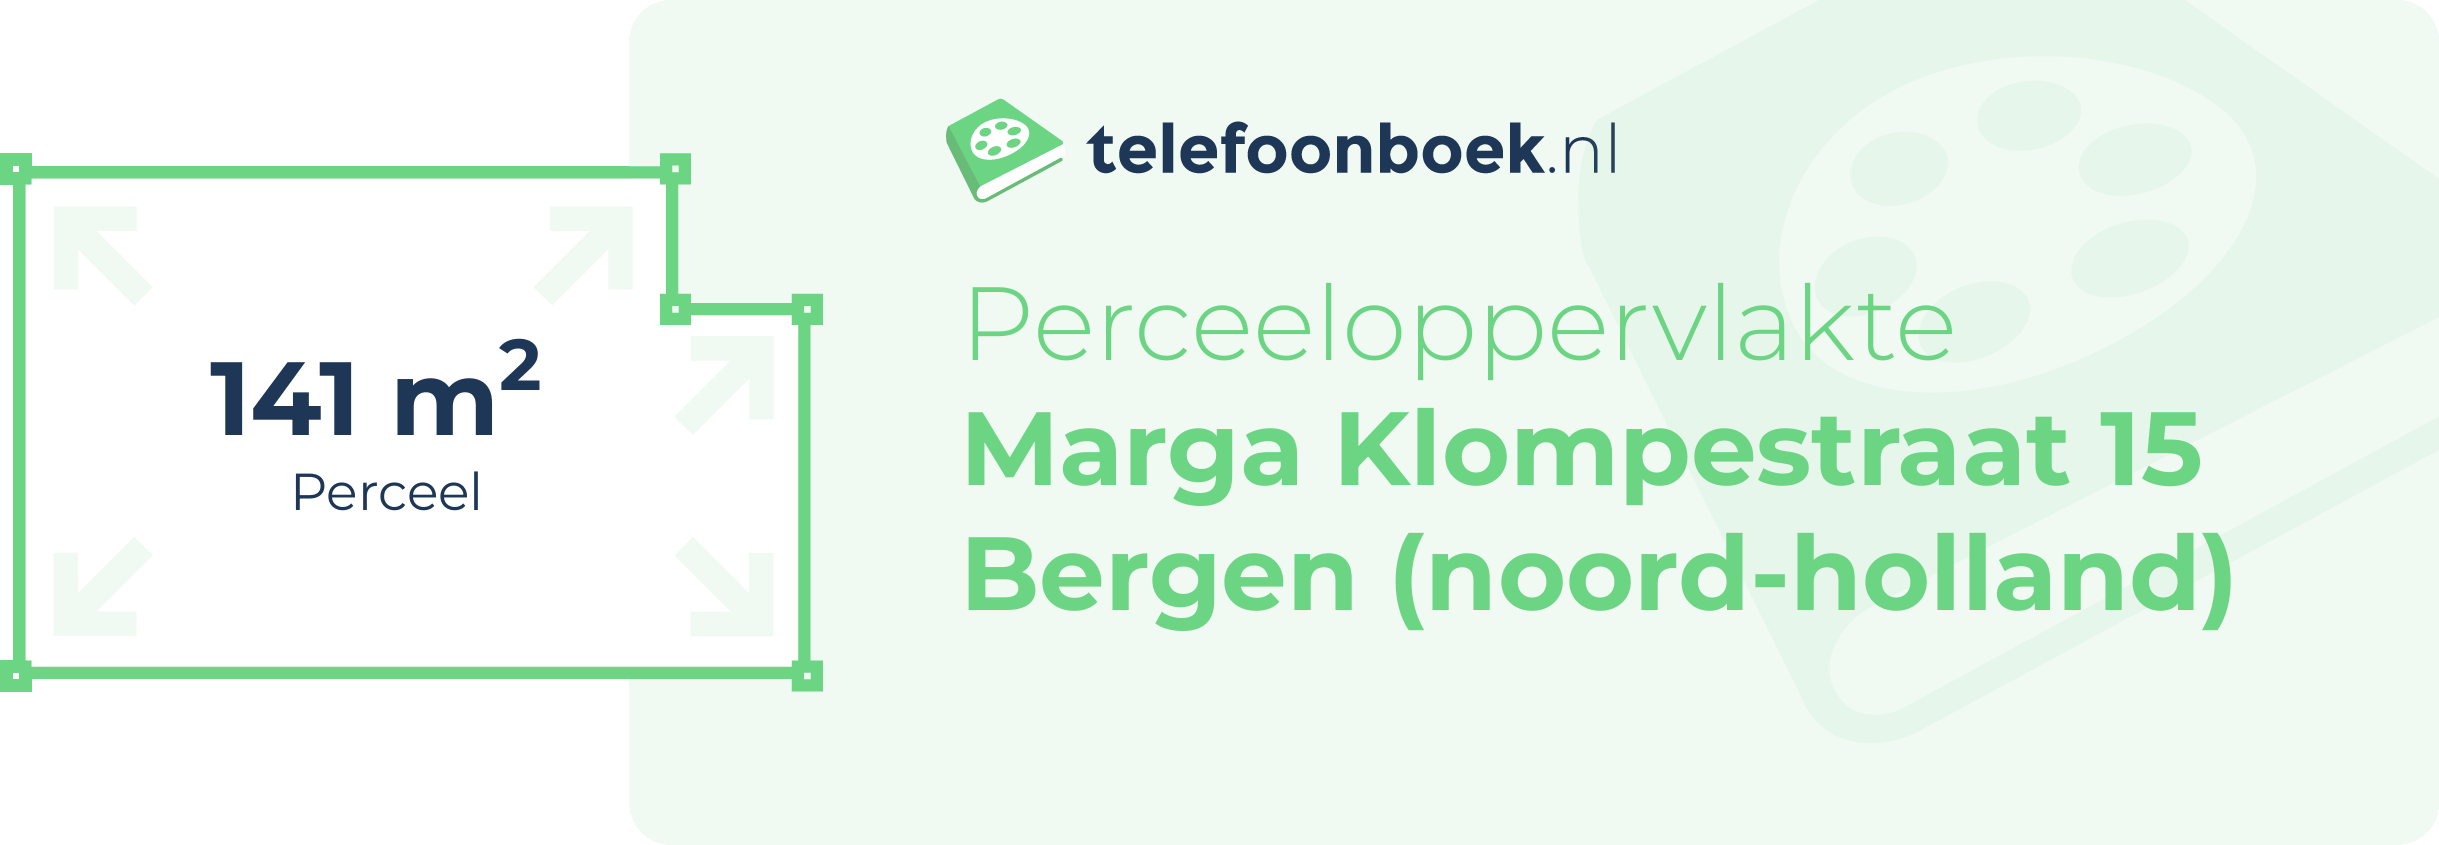 Perceeloppervlakte Marga Klompestraat 15 Bergen (Noord-Holland)